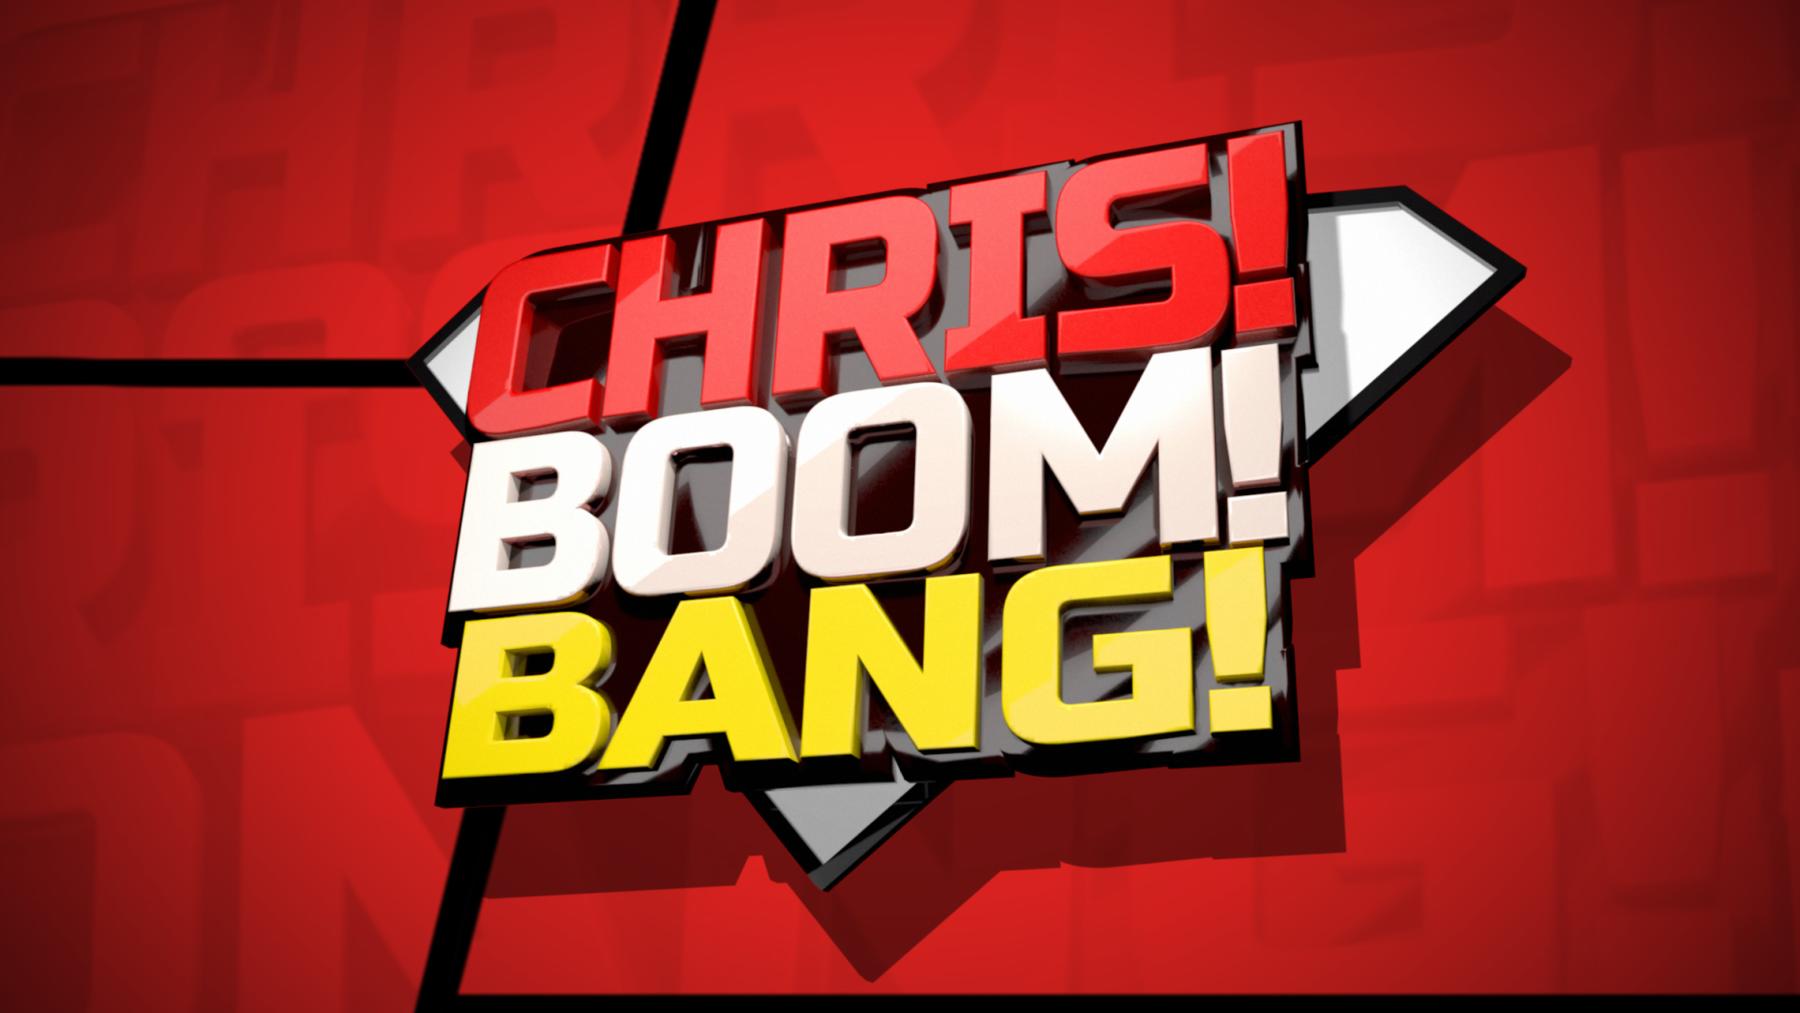 Chris! Boom! Bang!